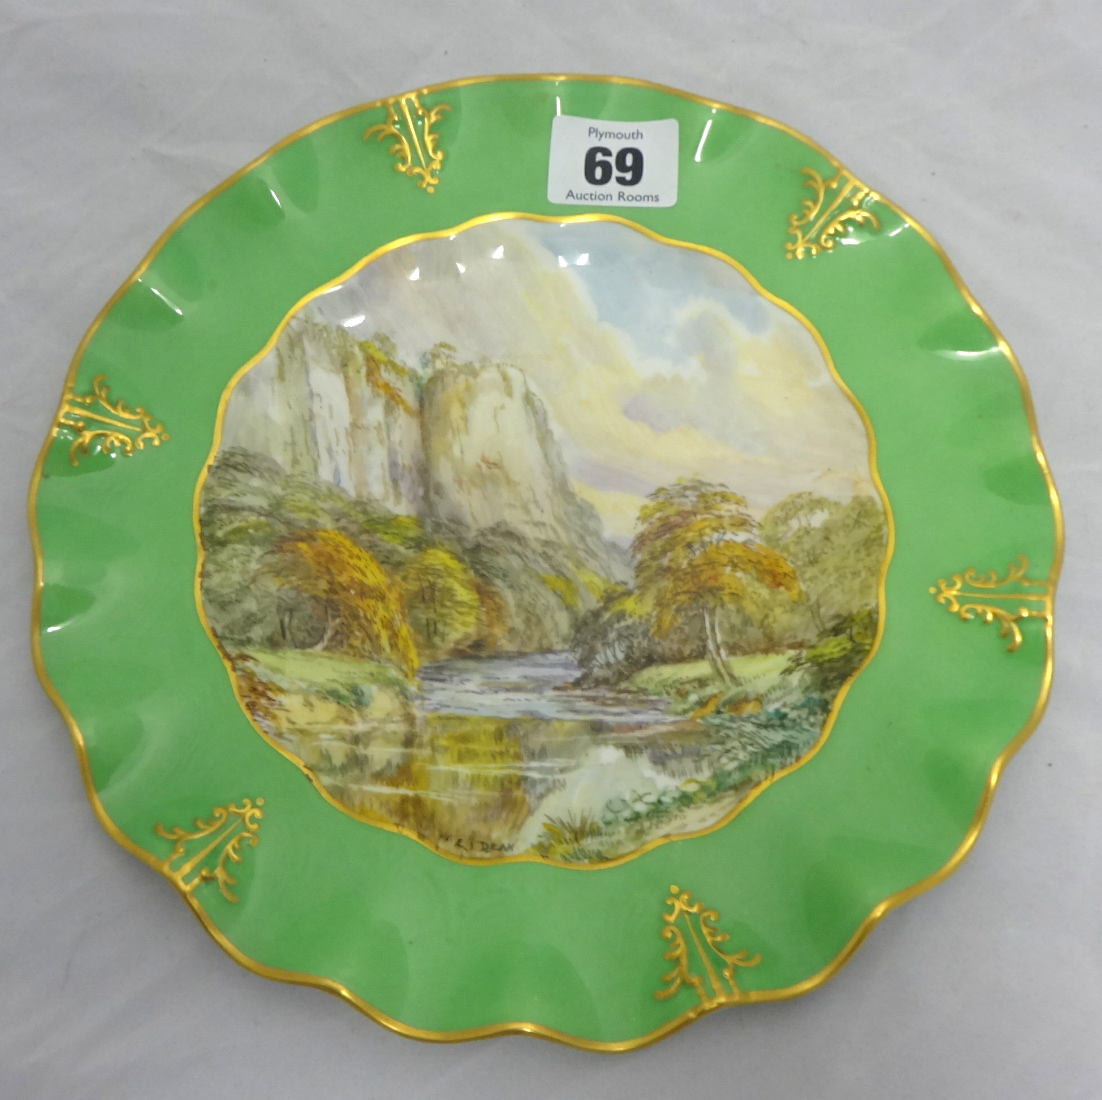 Royal Crown Derby porcelain plate, 'High Tor, Matlock', 22cm diameter.